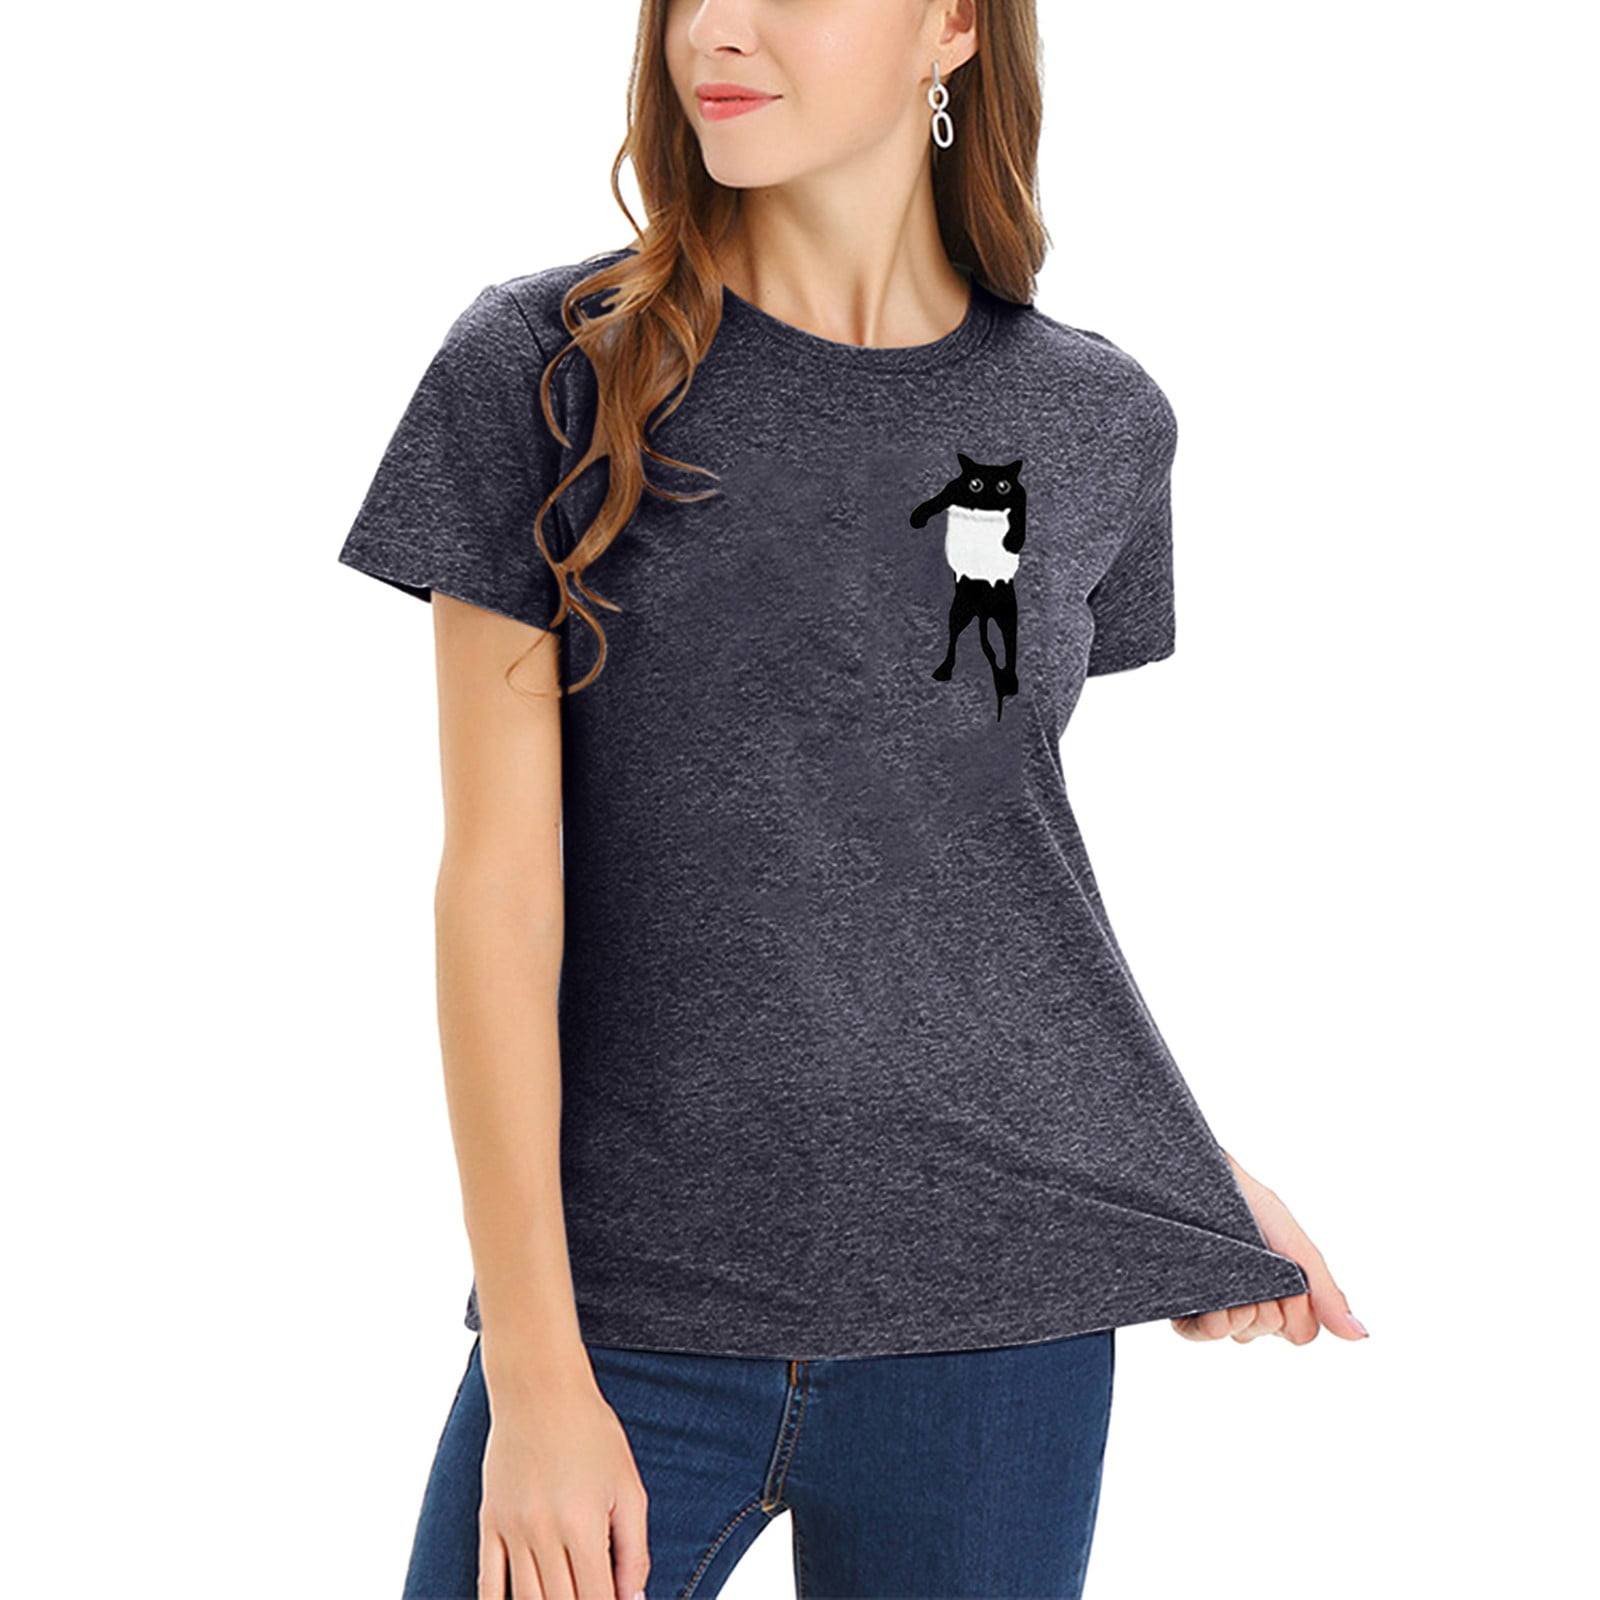 Meikosks Ladies Cat Print T-Shirt Short Sleeve Pullover Casual Simple Tops Cute Blouses 